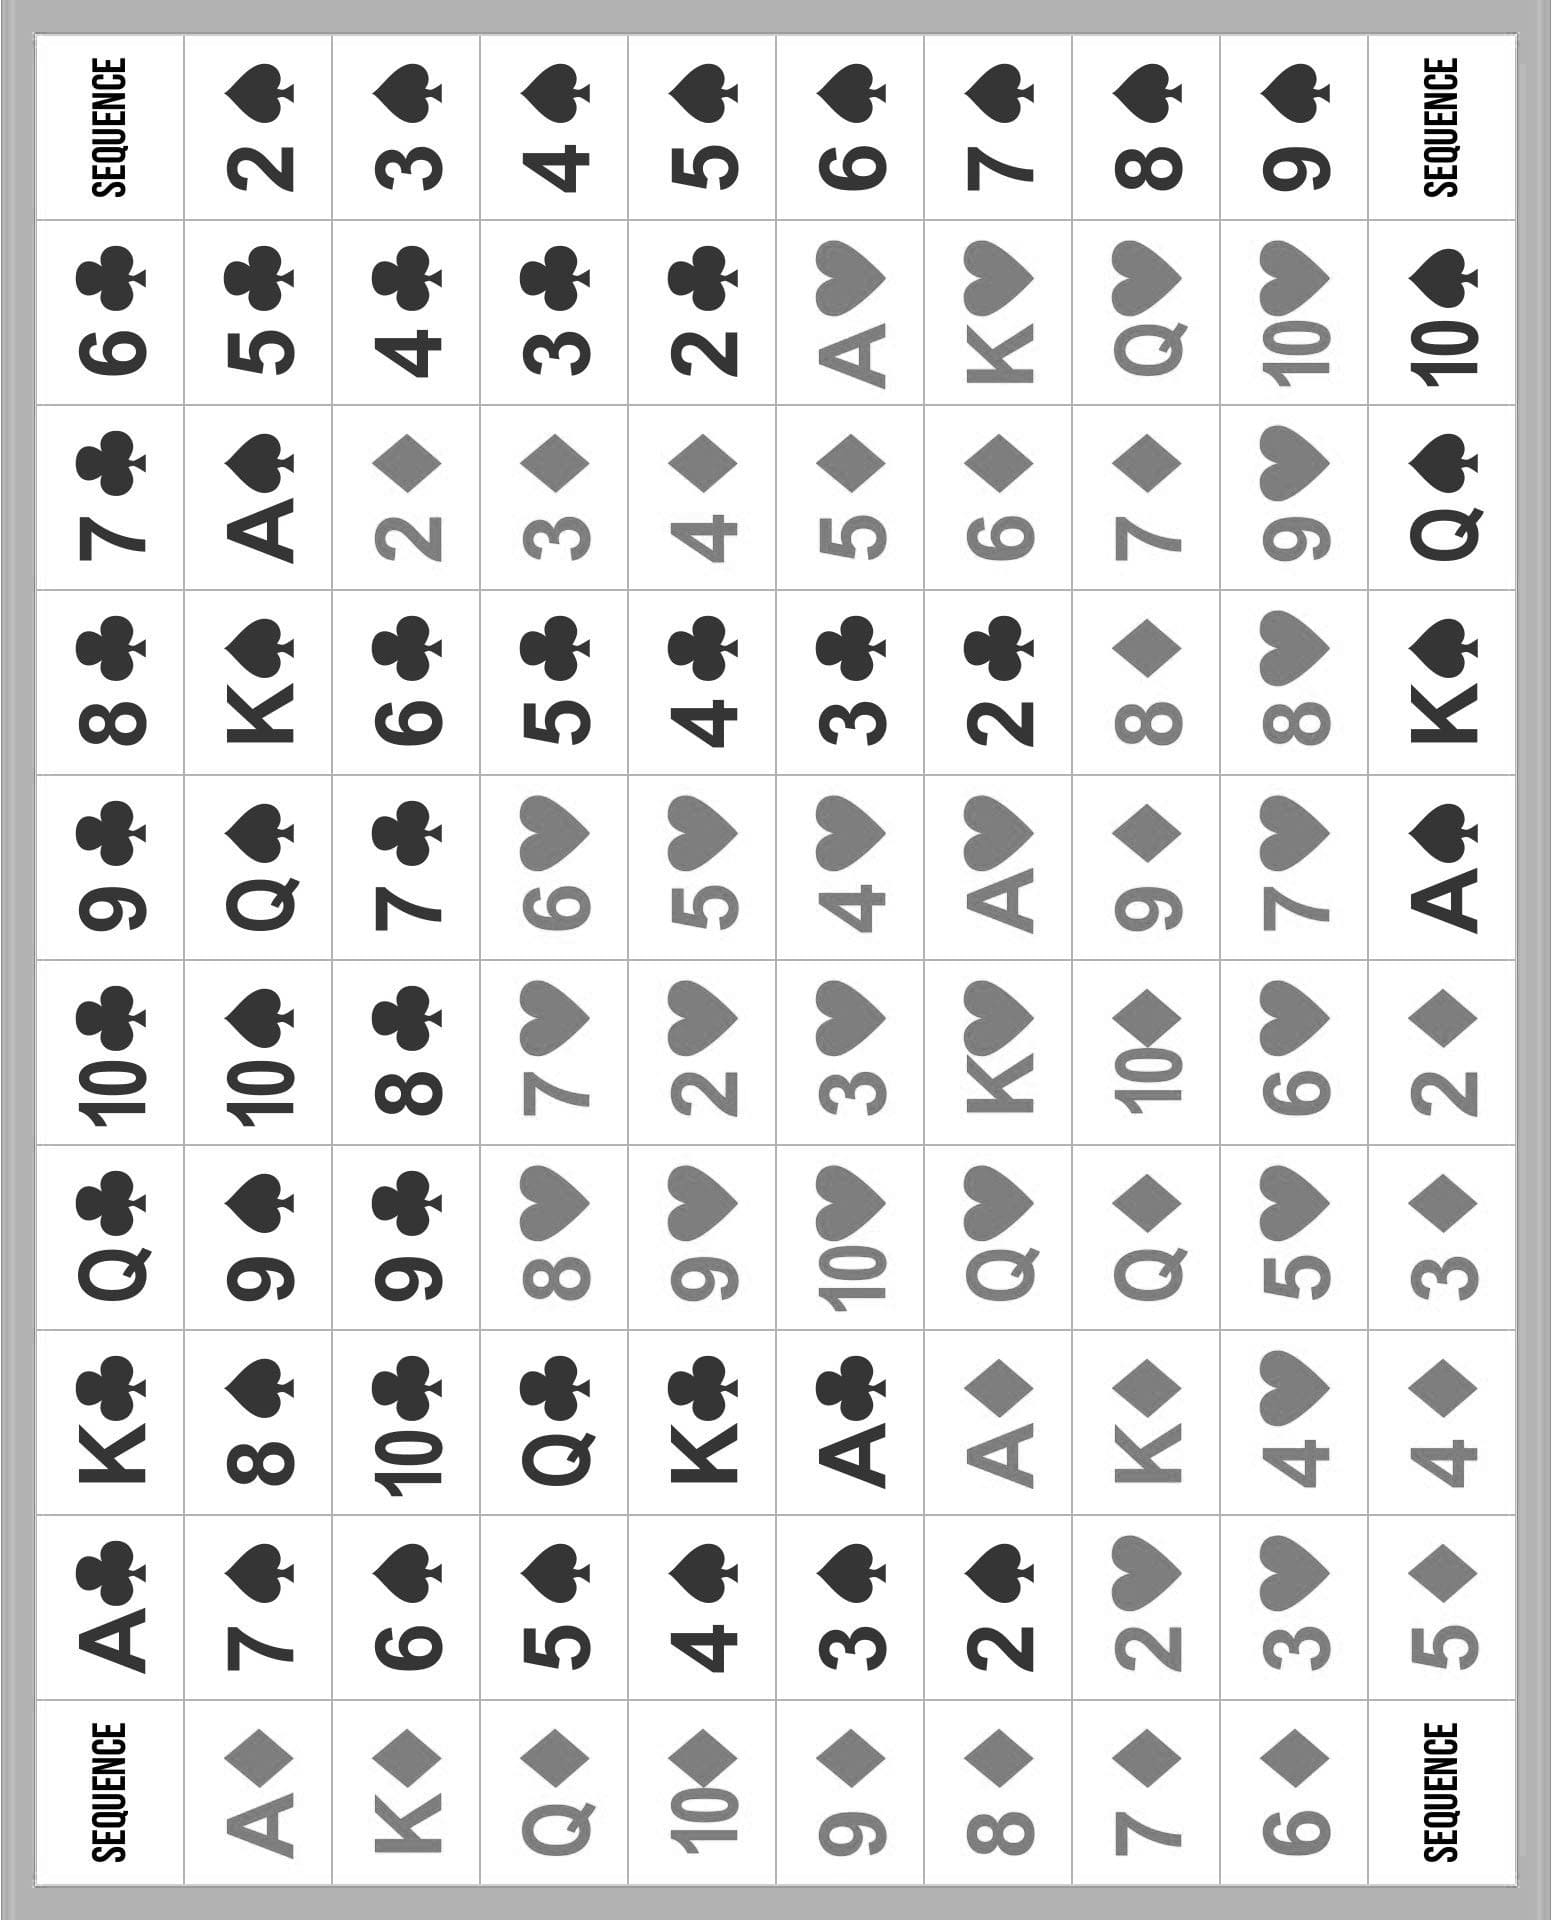 Printable Sequence Board Game Original